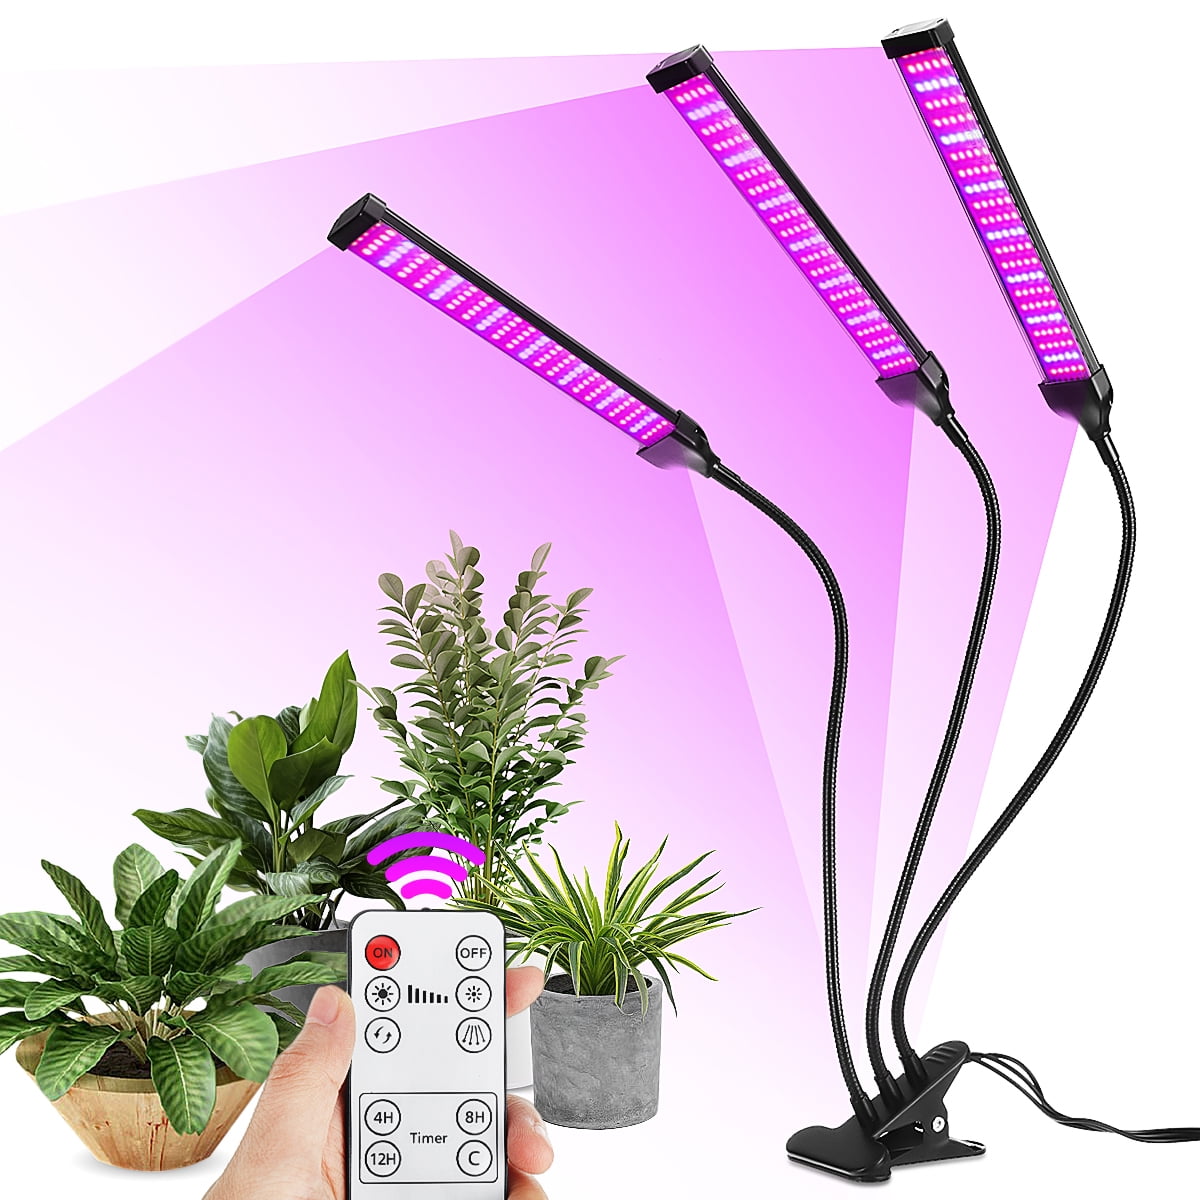 Details about   2000W 8000W LED Grow Light Full Spectrum Hydroponic Plant Veg Bloom Flower Lamp 